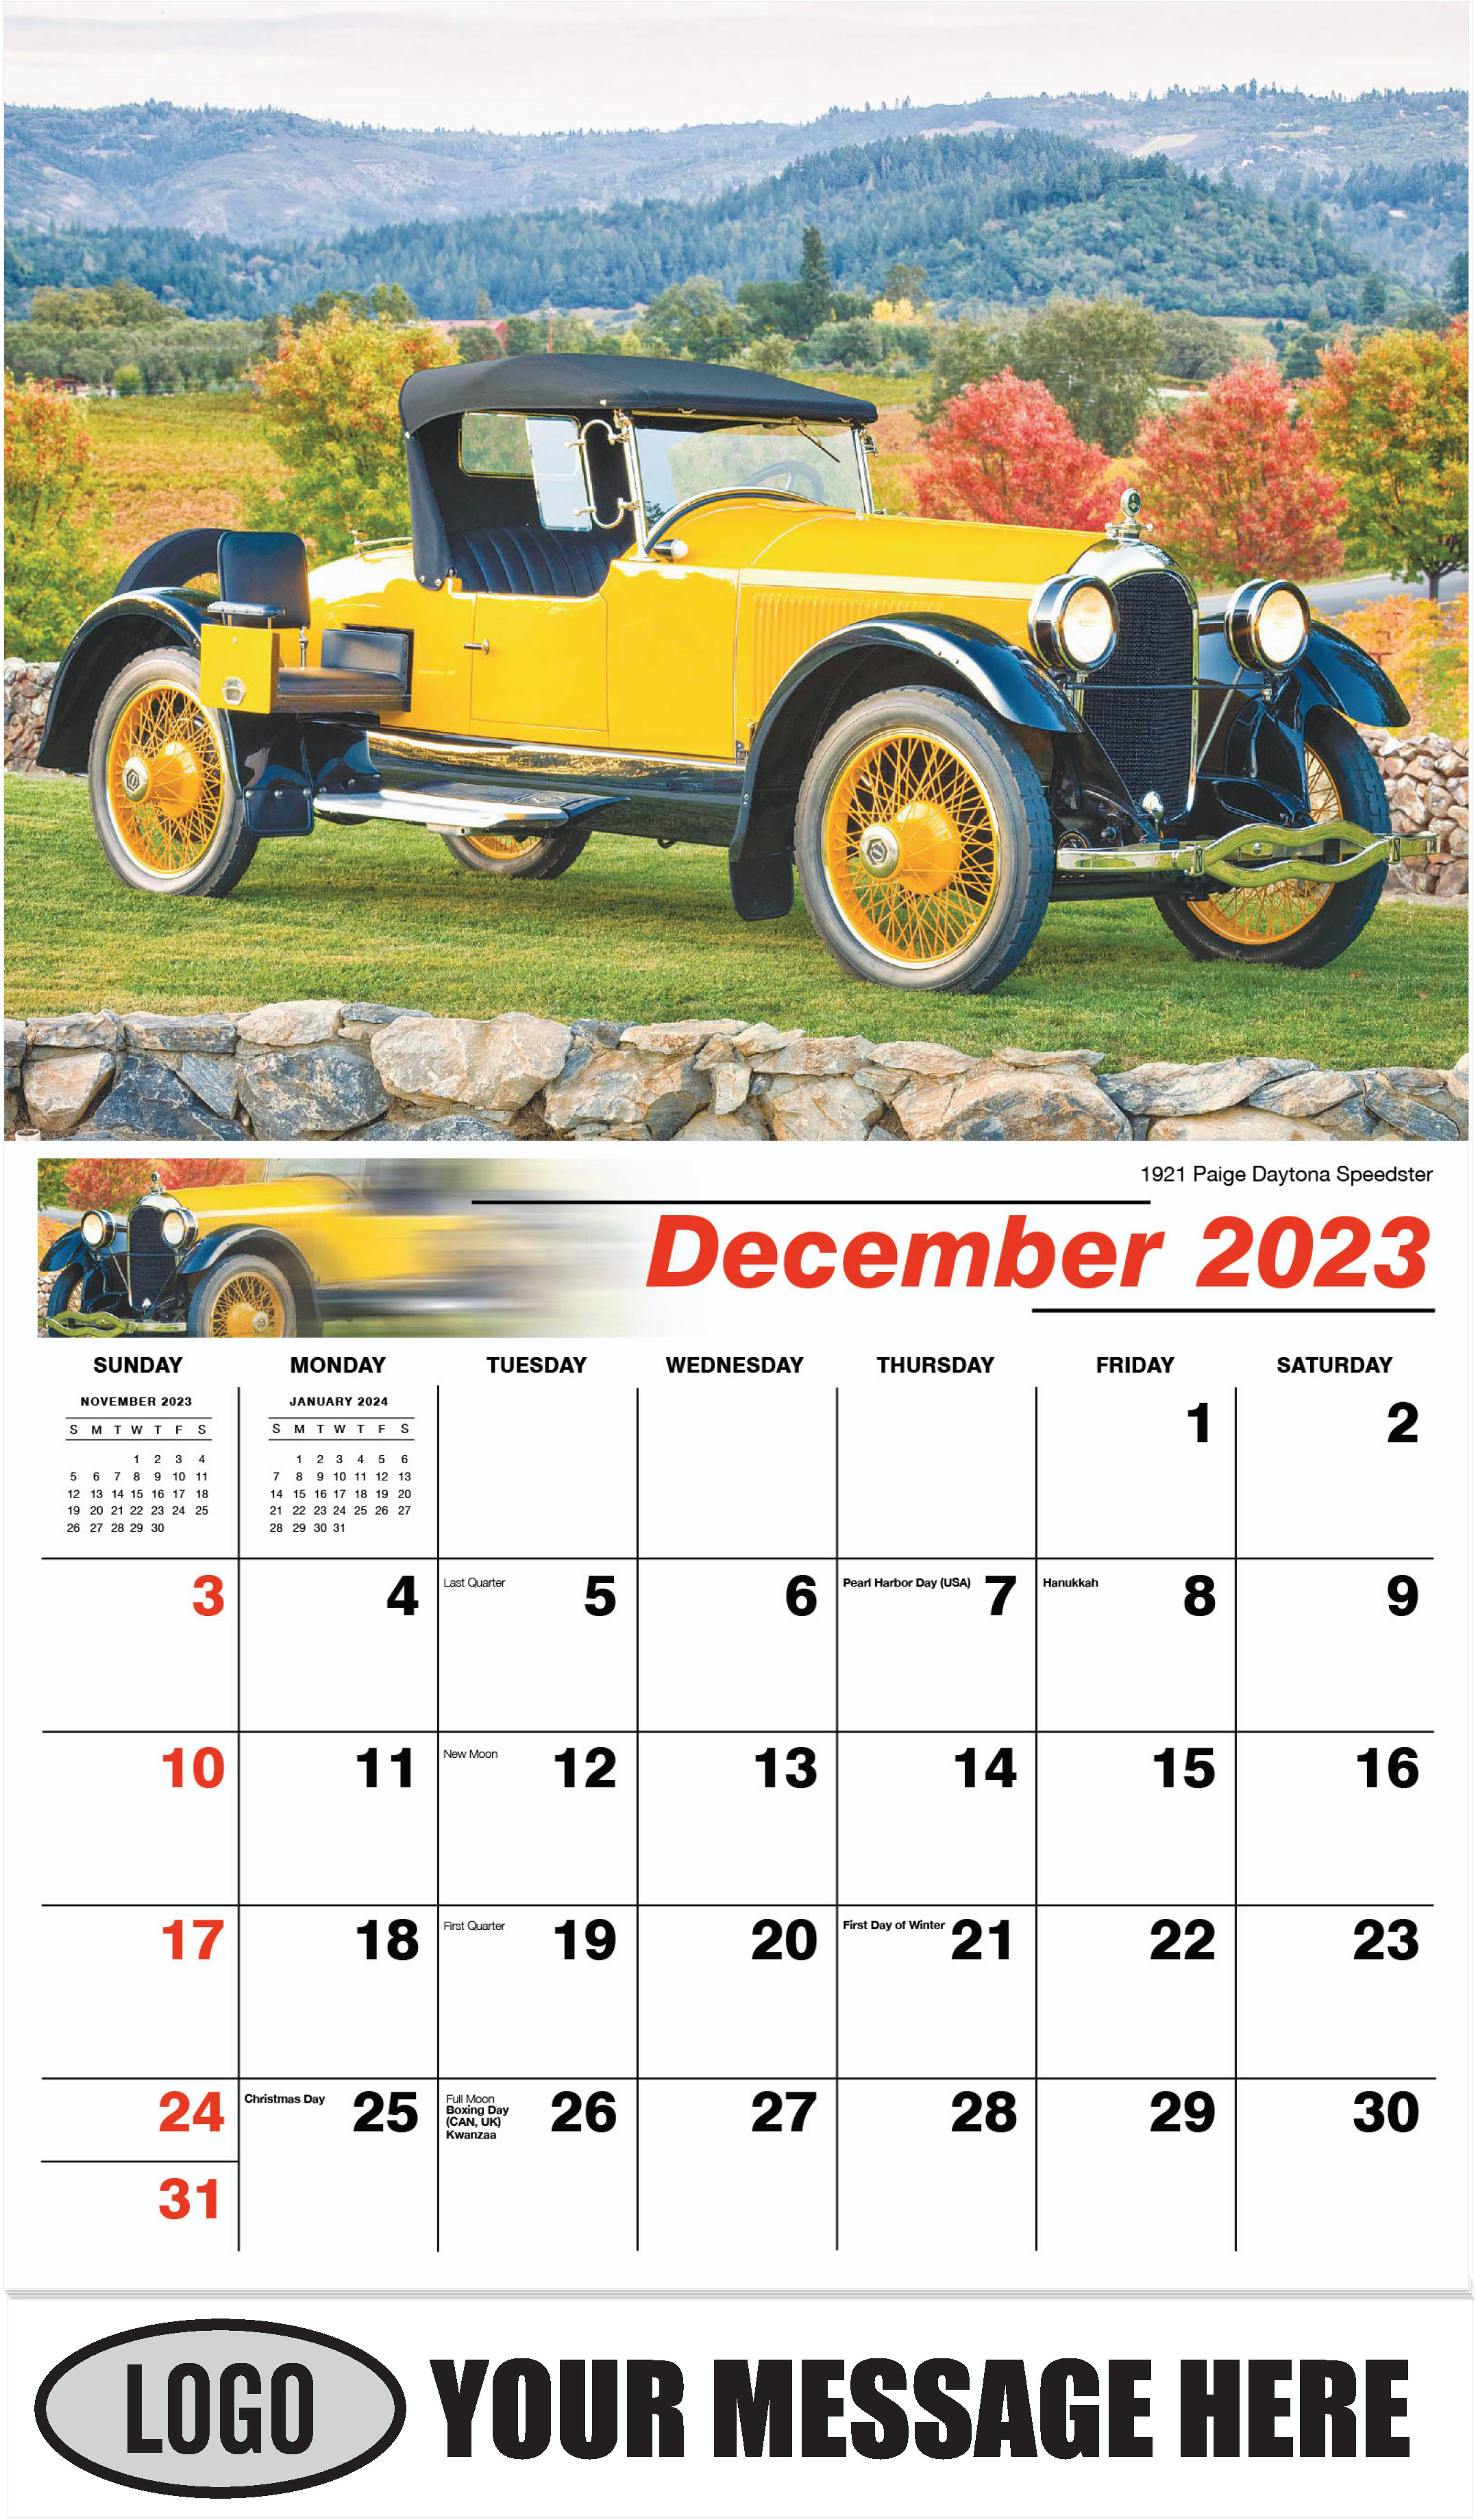 1921 Paige Daytona Speedster - December 2023 - Classic Cars 2023 Promotional Calendar